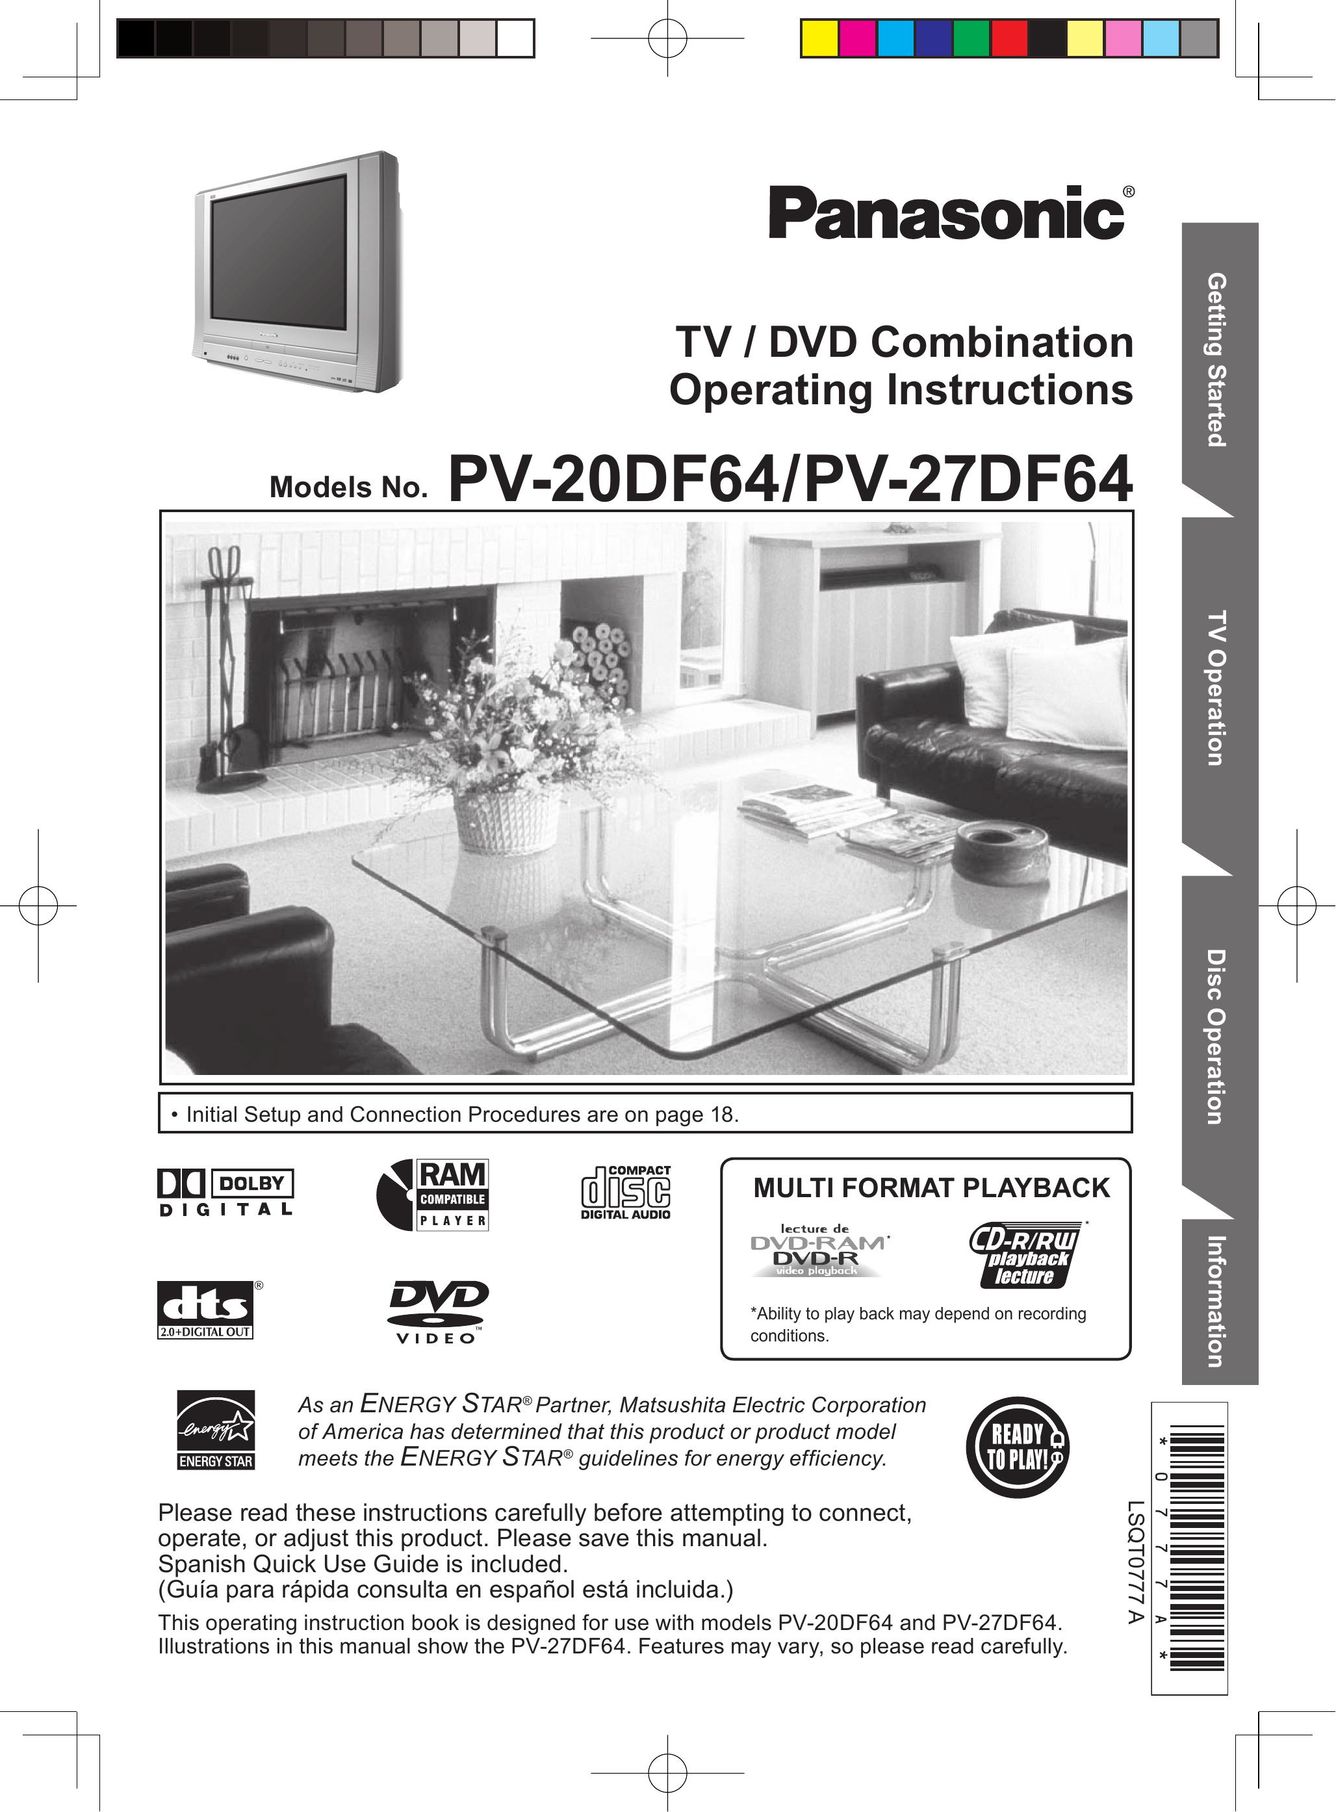 Panasonic PV 20DF64 TV DVD Combo User Manual